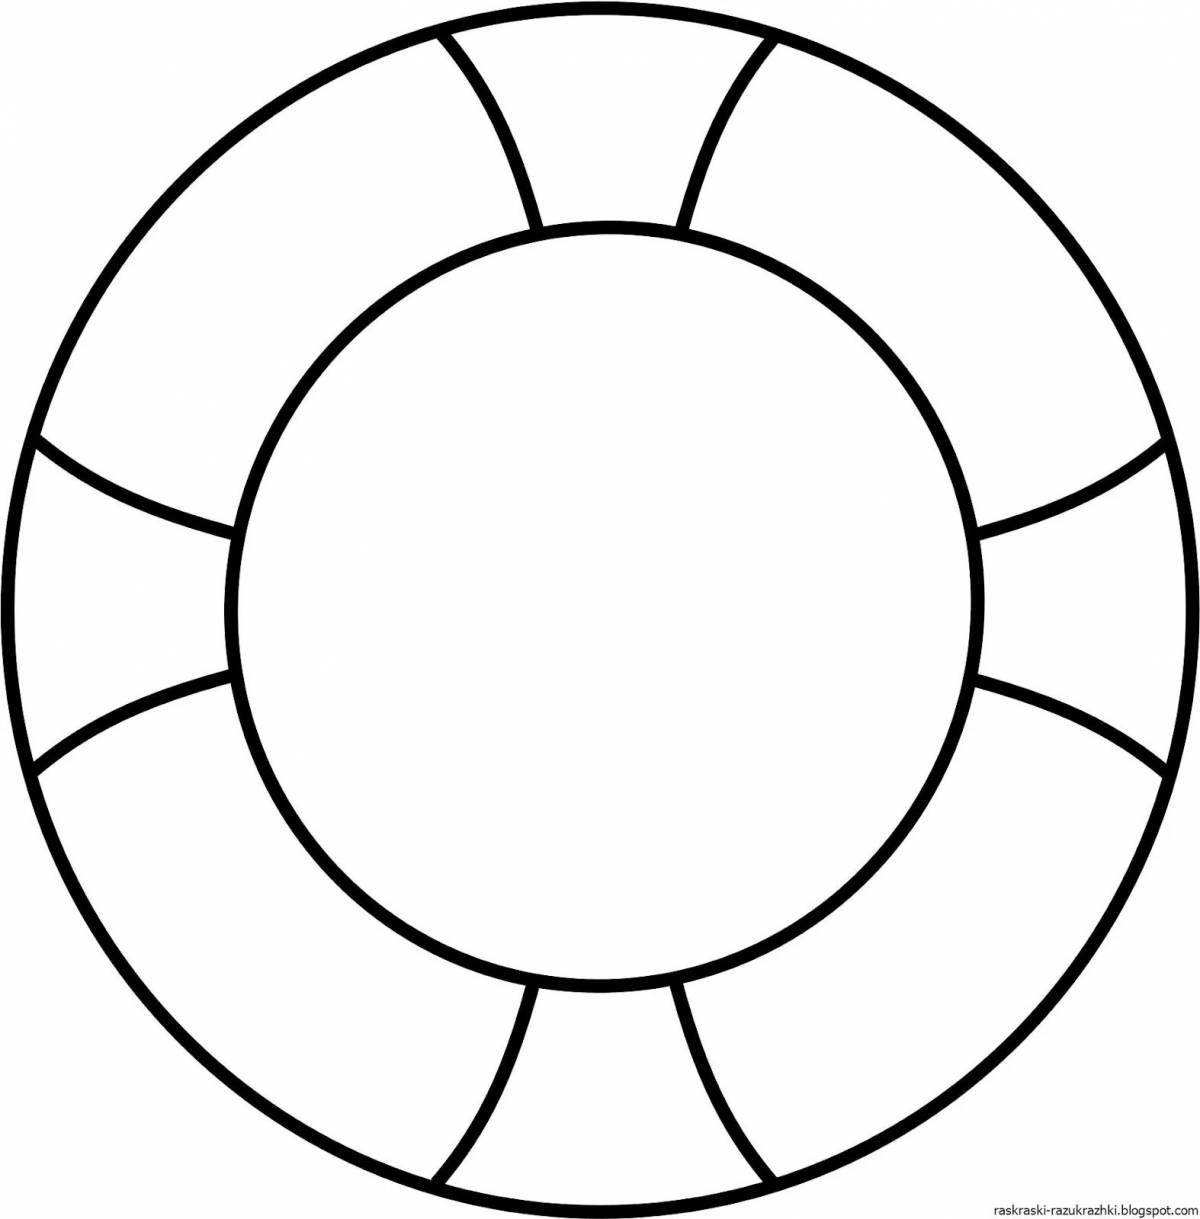 Detailed circle pattern coloring page